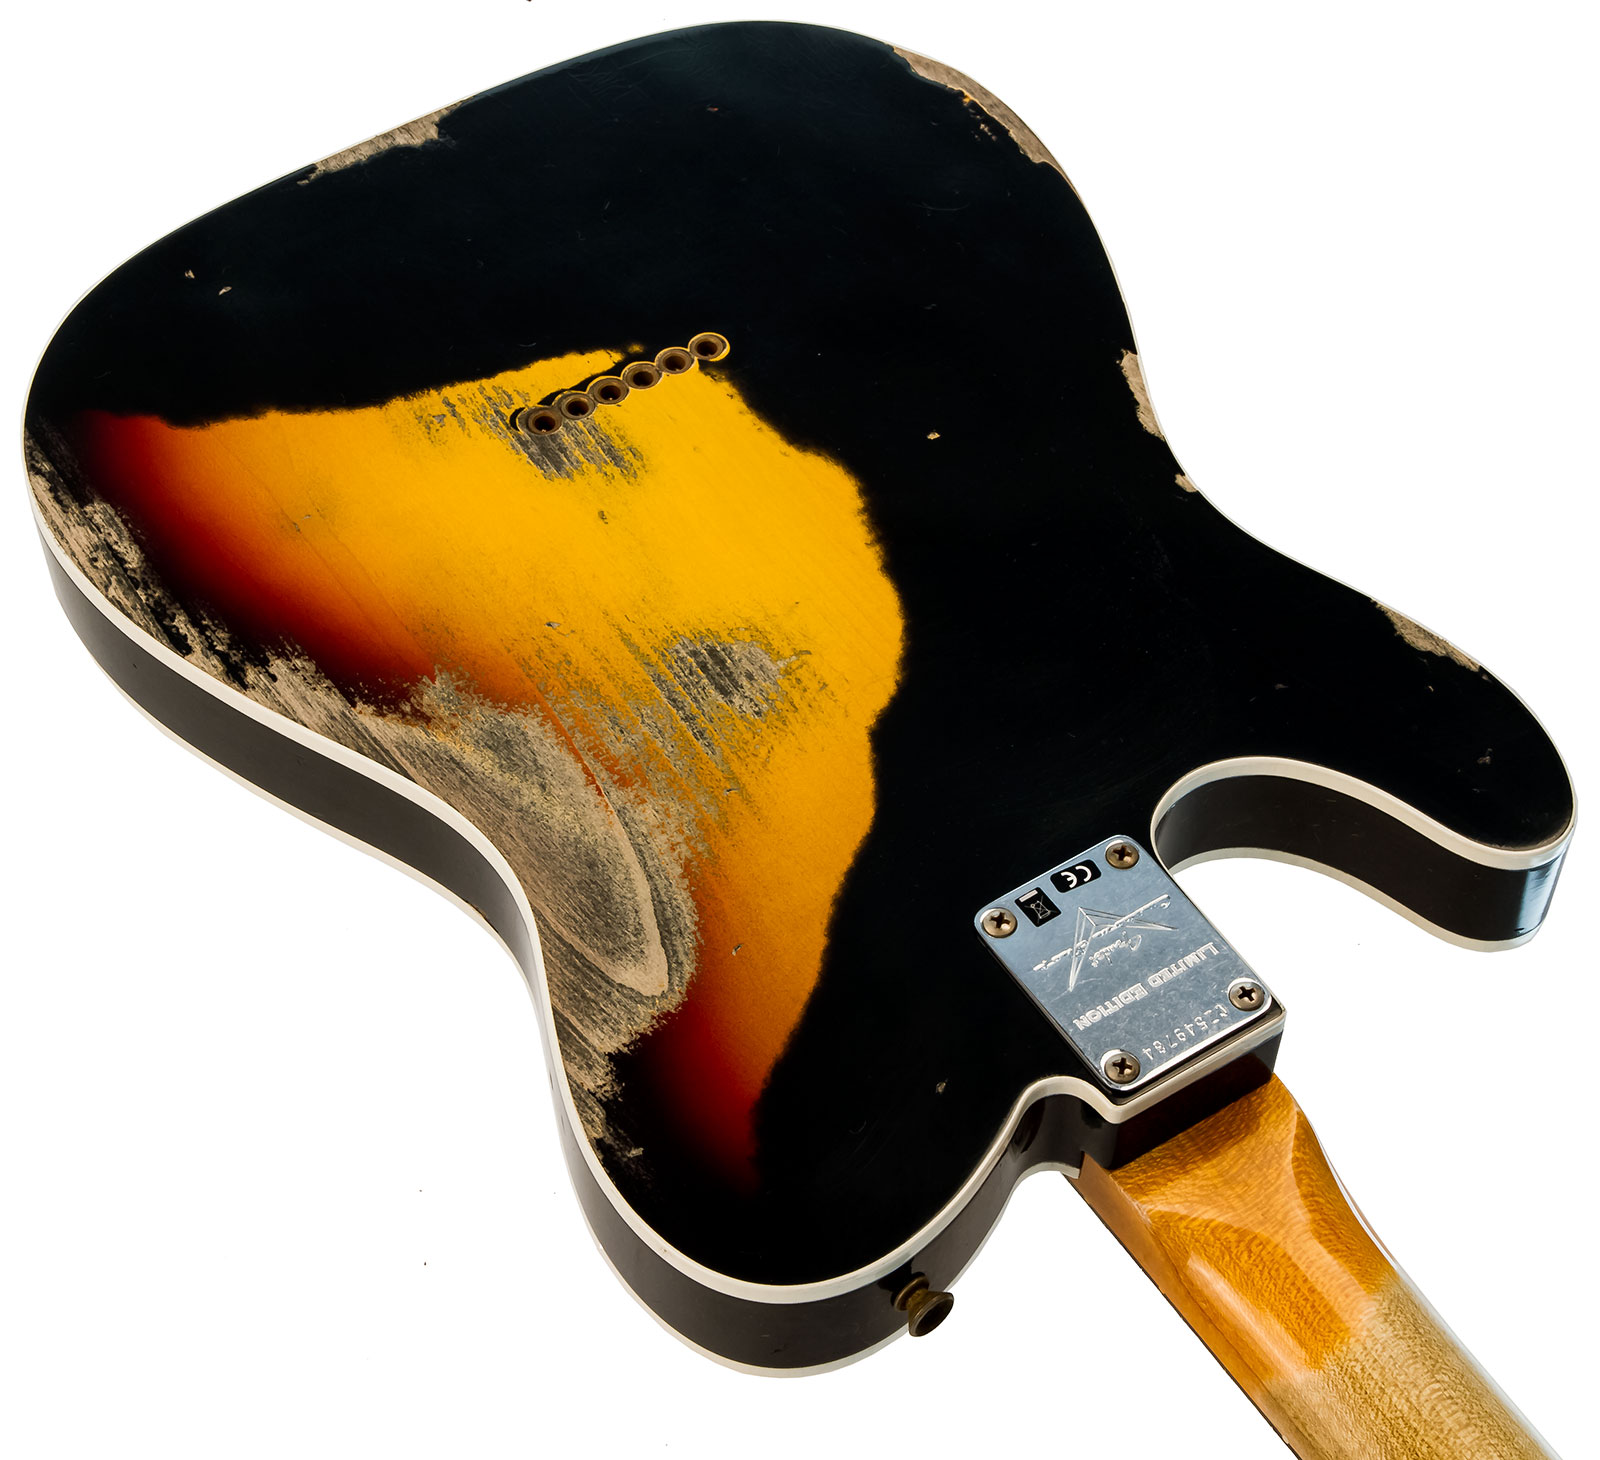 Fender Custom Shop Tele Custom 1960 Sh Ltd Hs Ht Rw #cz549784 - Heavy Relic Black Over 3-color Sunburst - Tel shape electric guitar - Variation 4